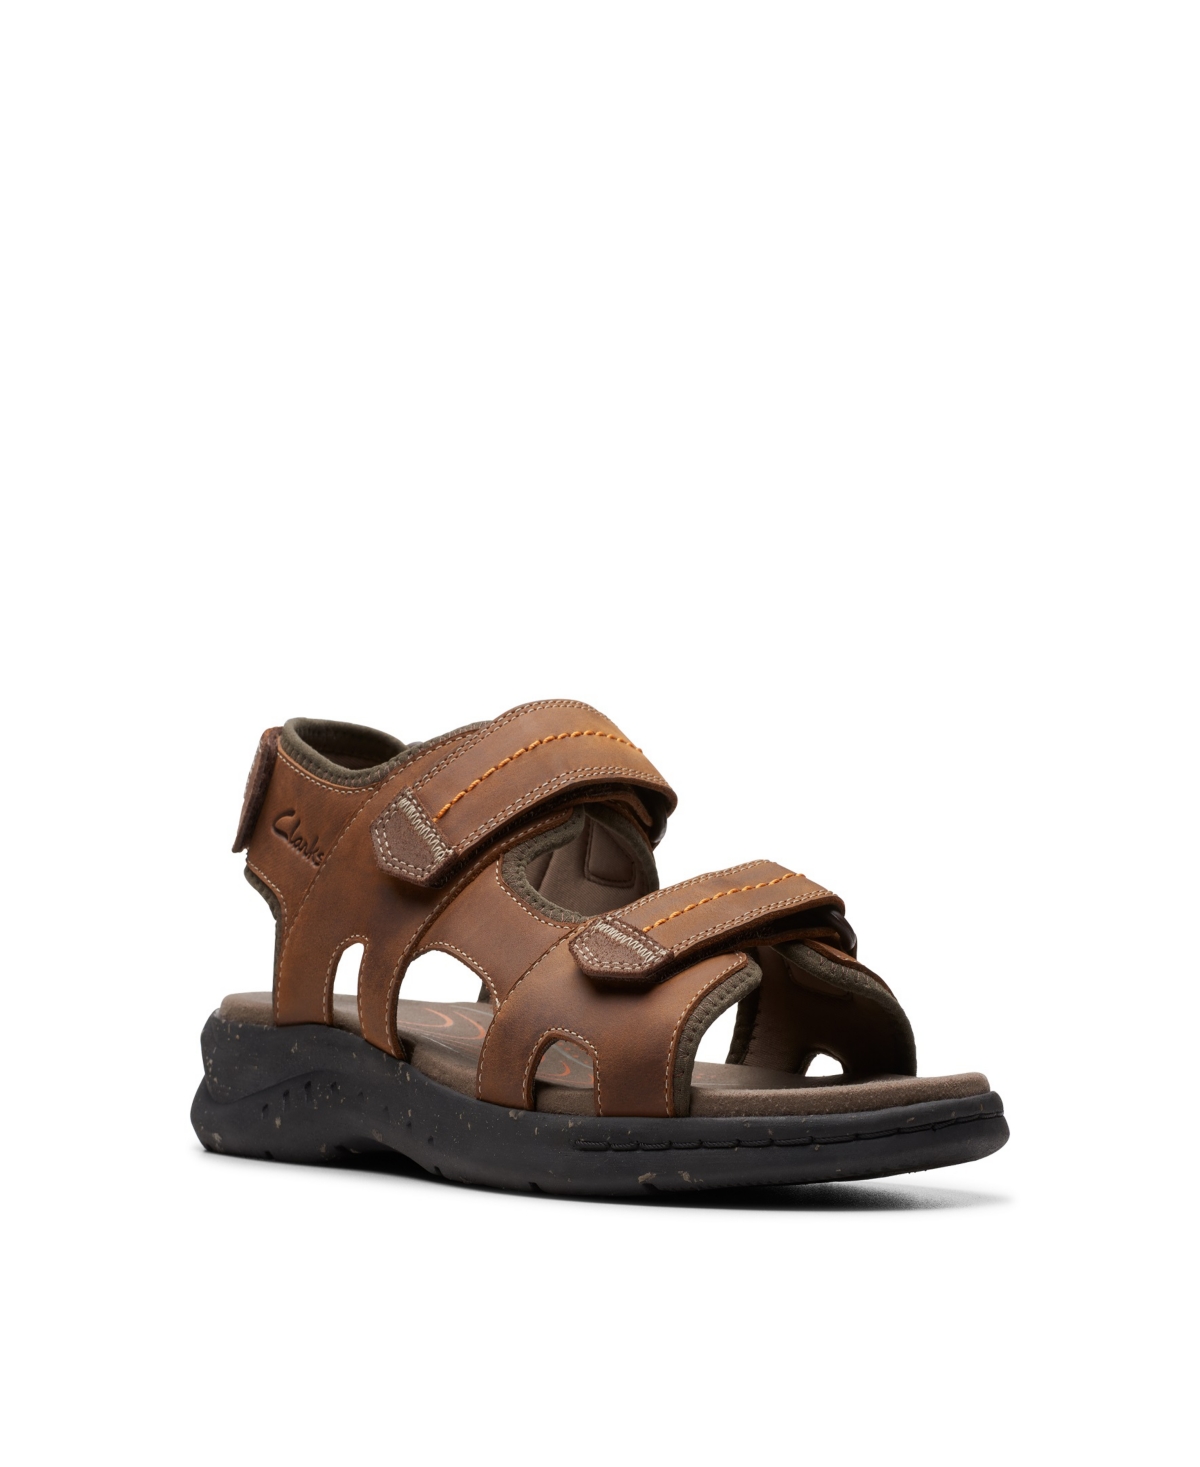 Collection Men's Walkford Walk Sandals - Light Brown